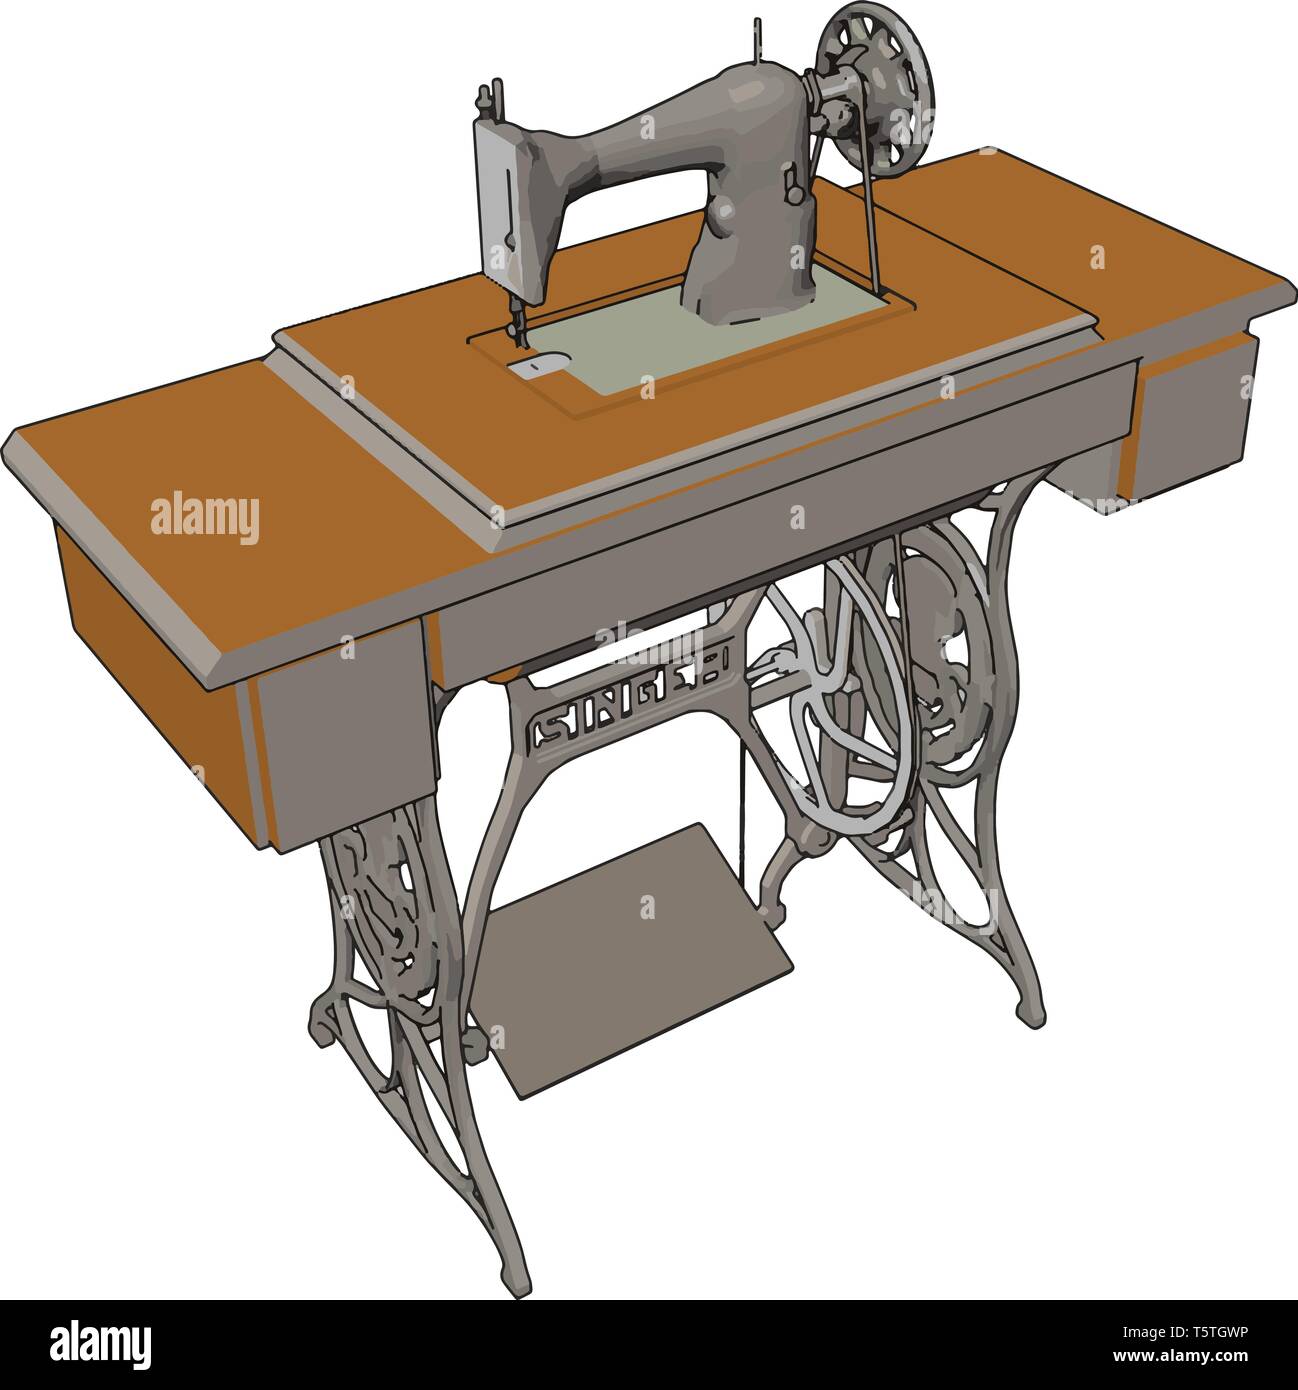 File:Maquina de coser manual de principios del siglo XX.jpg - Wikimedia  Commons